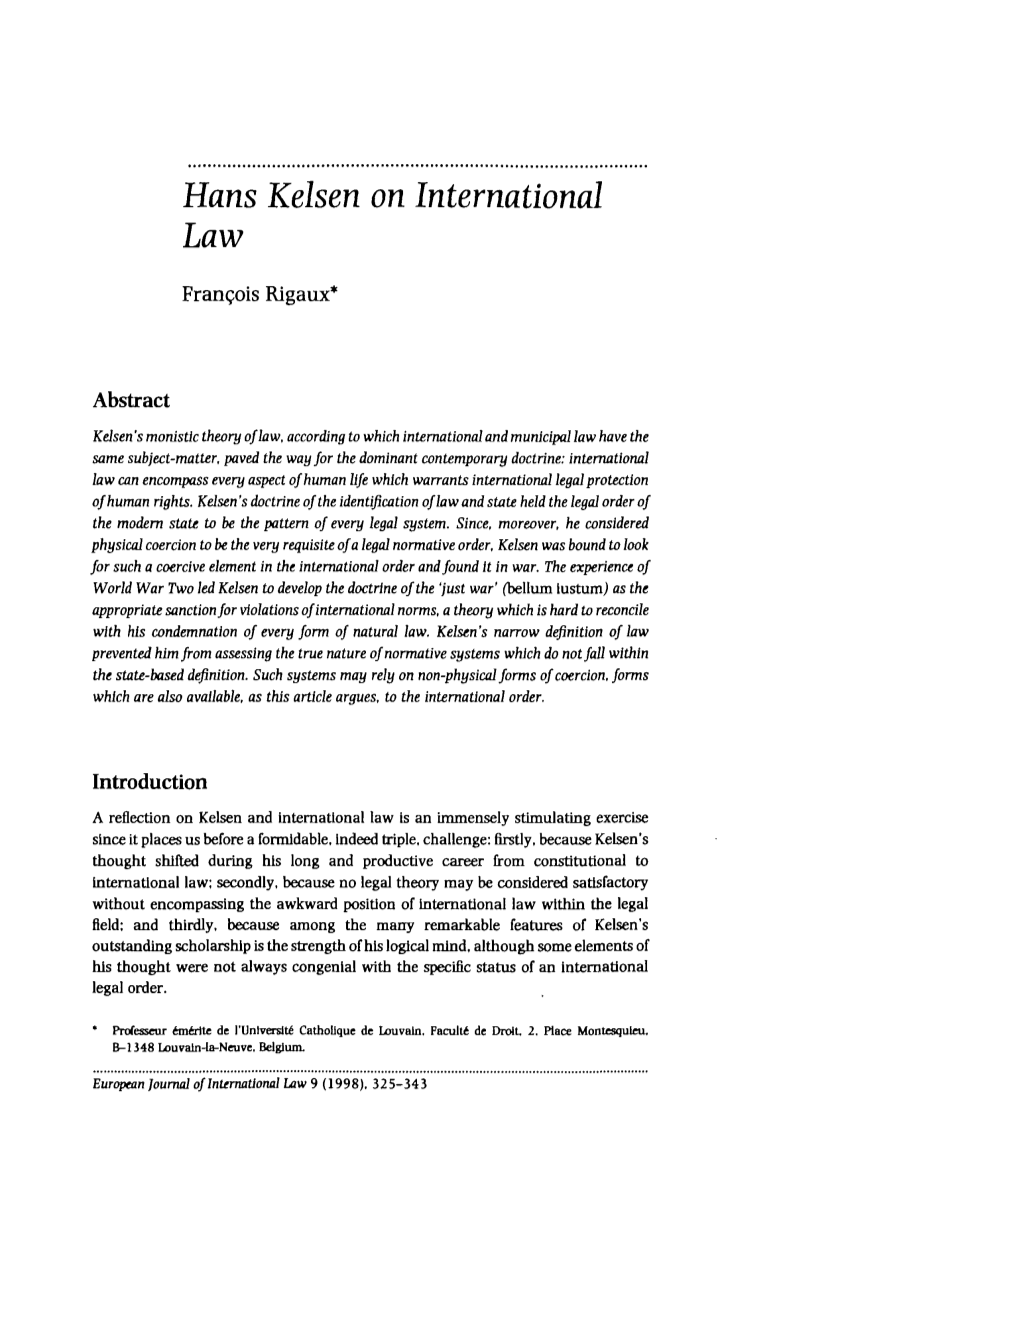 Hans Kelsen on International Law